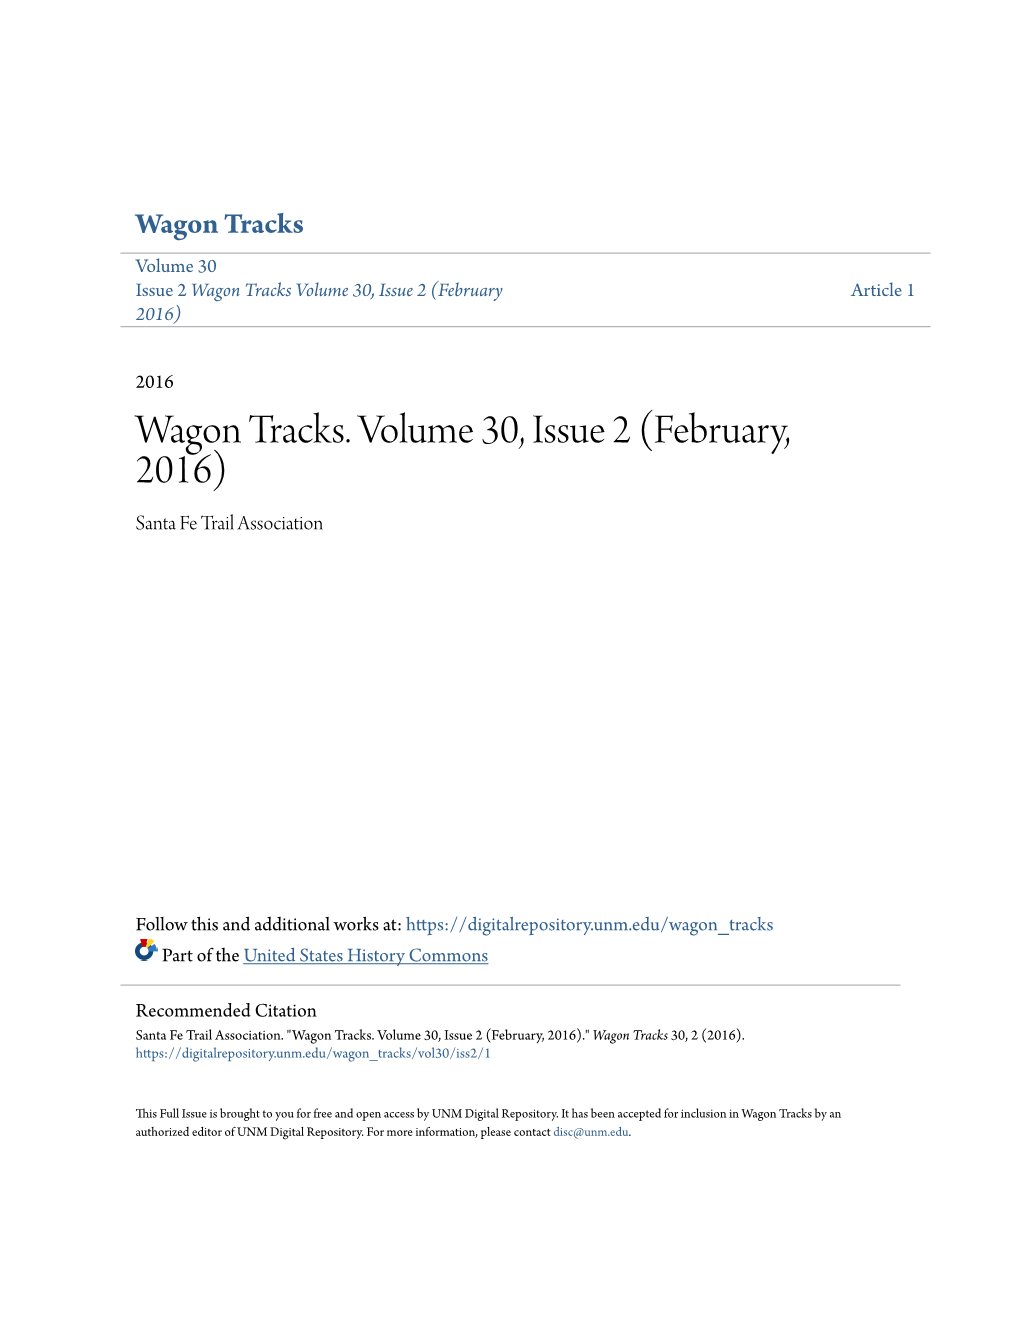 Wagon Tracks. Volume 30, Issue 2 (February, 2016) Santa Fe Trail Association